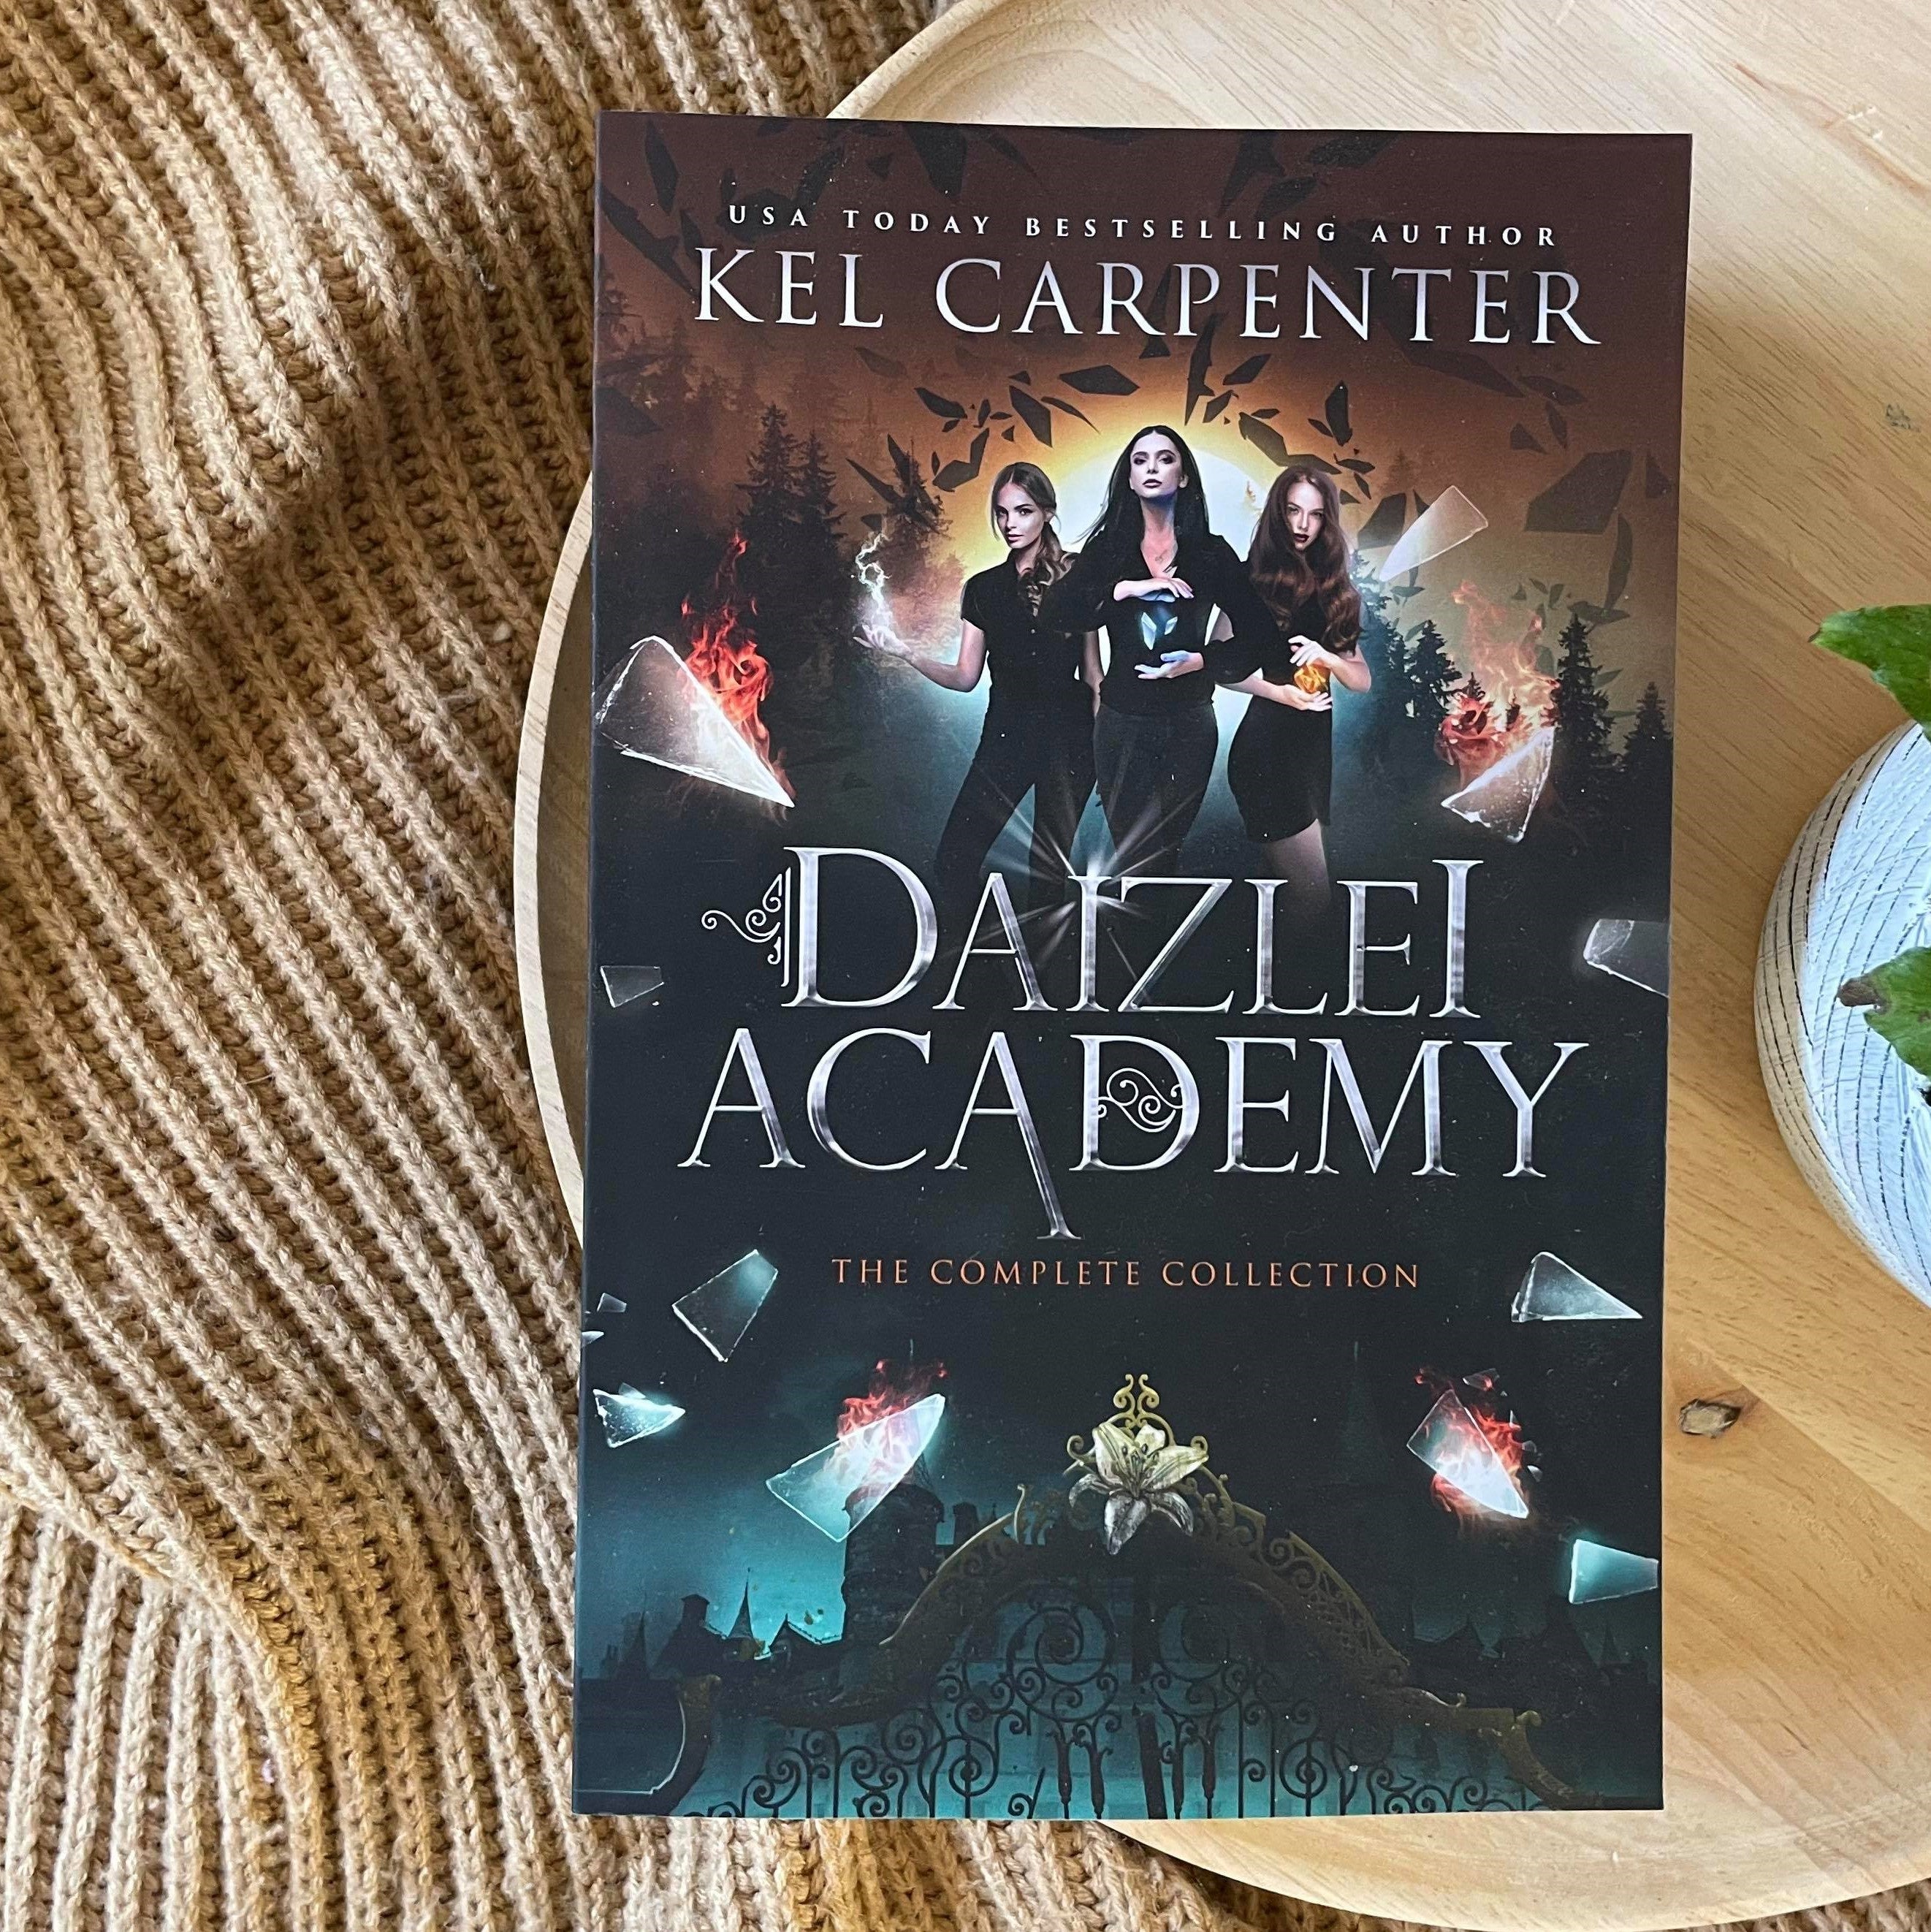 Daizlei Academy: Complete Collection by Kel Carpenter